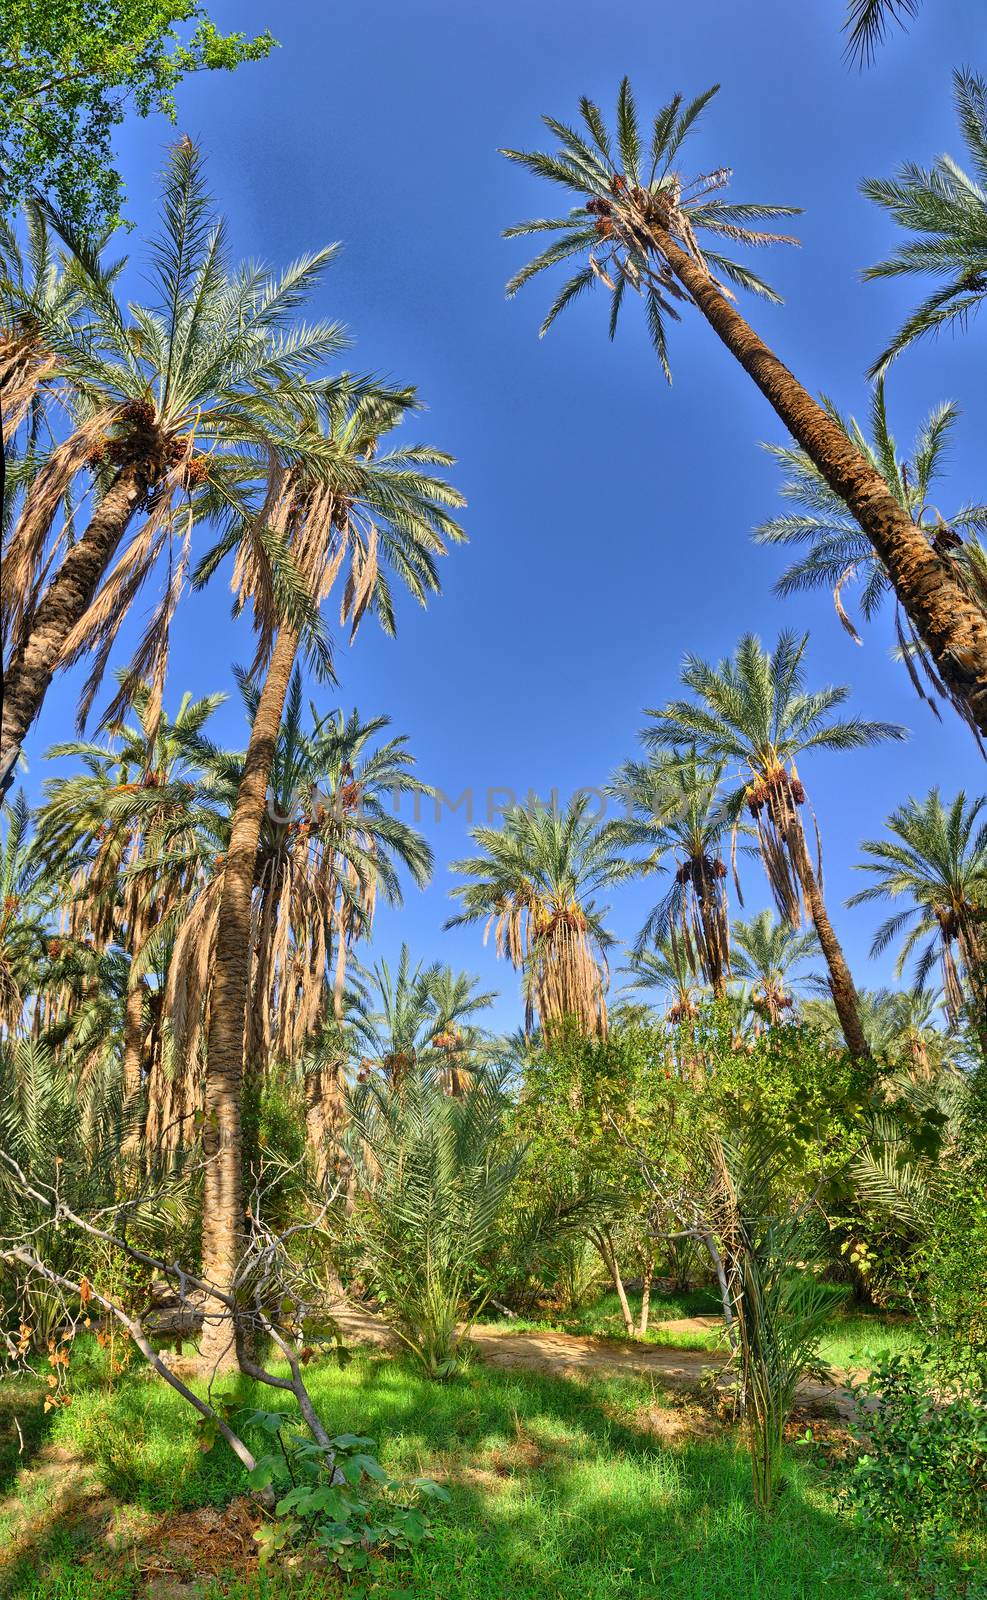 Date Palms in jungles, Tamerza oasis in Sahara Desert, Tunisia, Africa, HDR